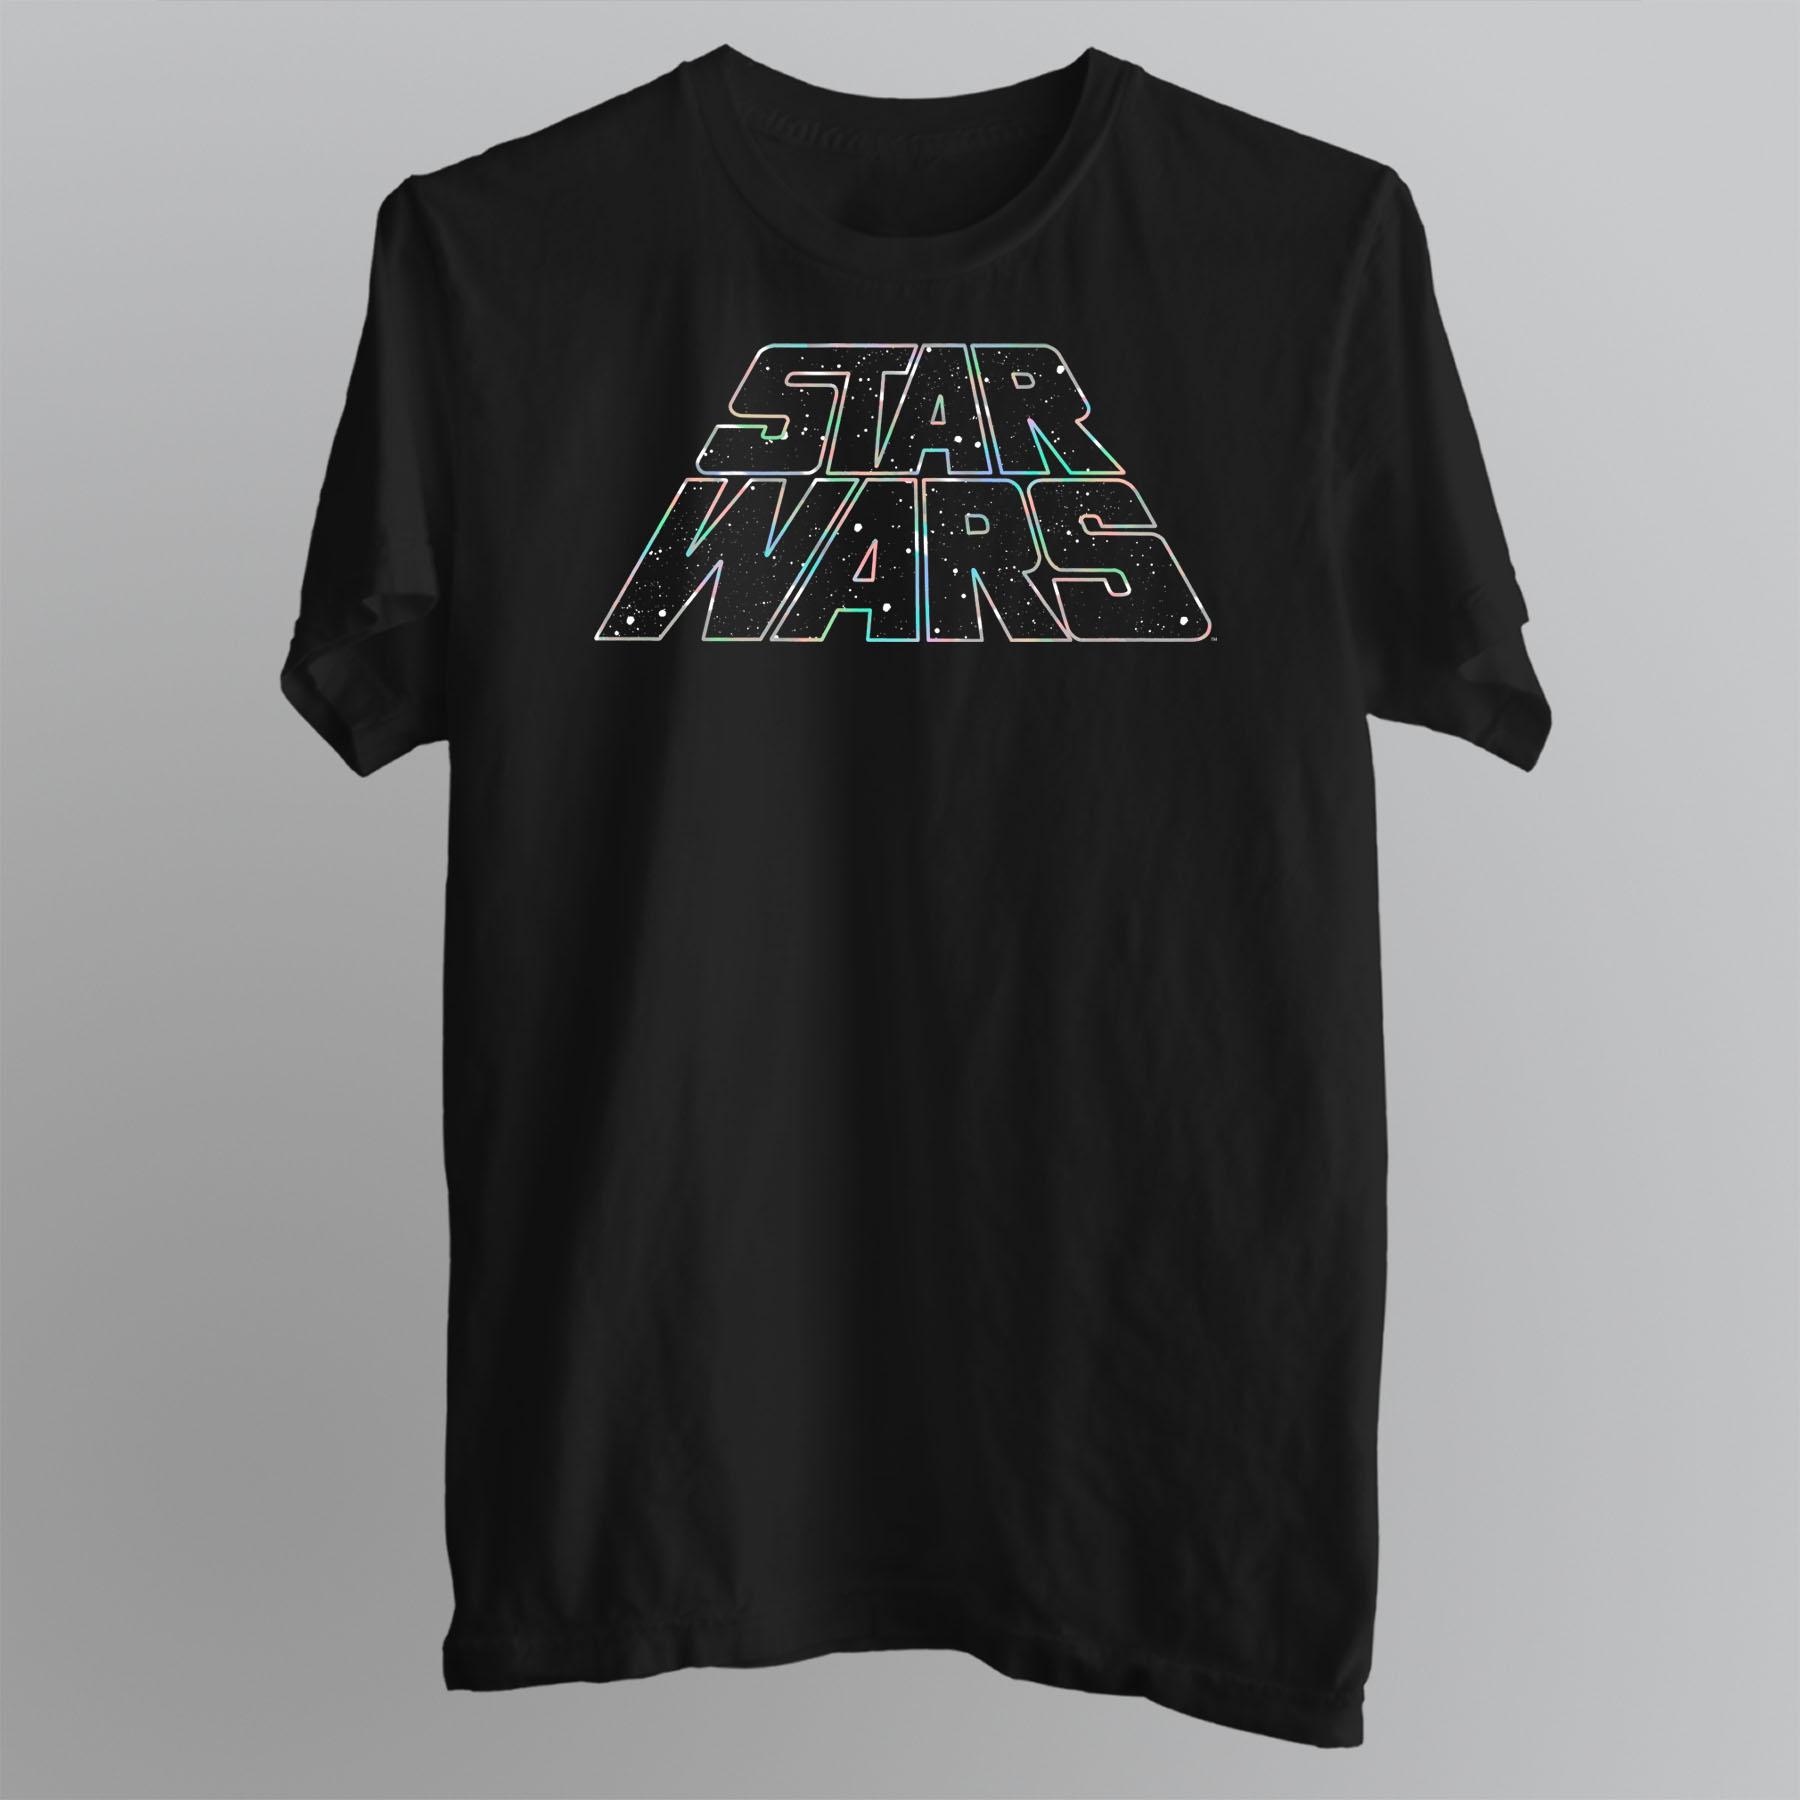 Star Wars Men's Graphic T-shirt